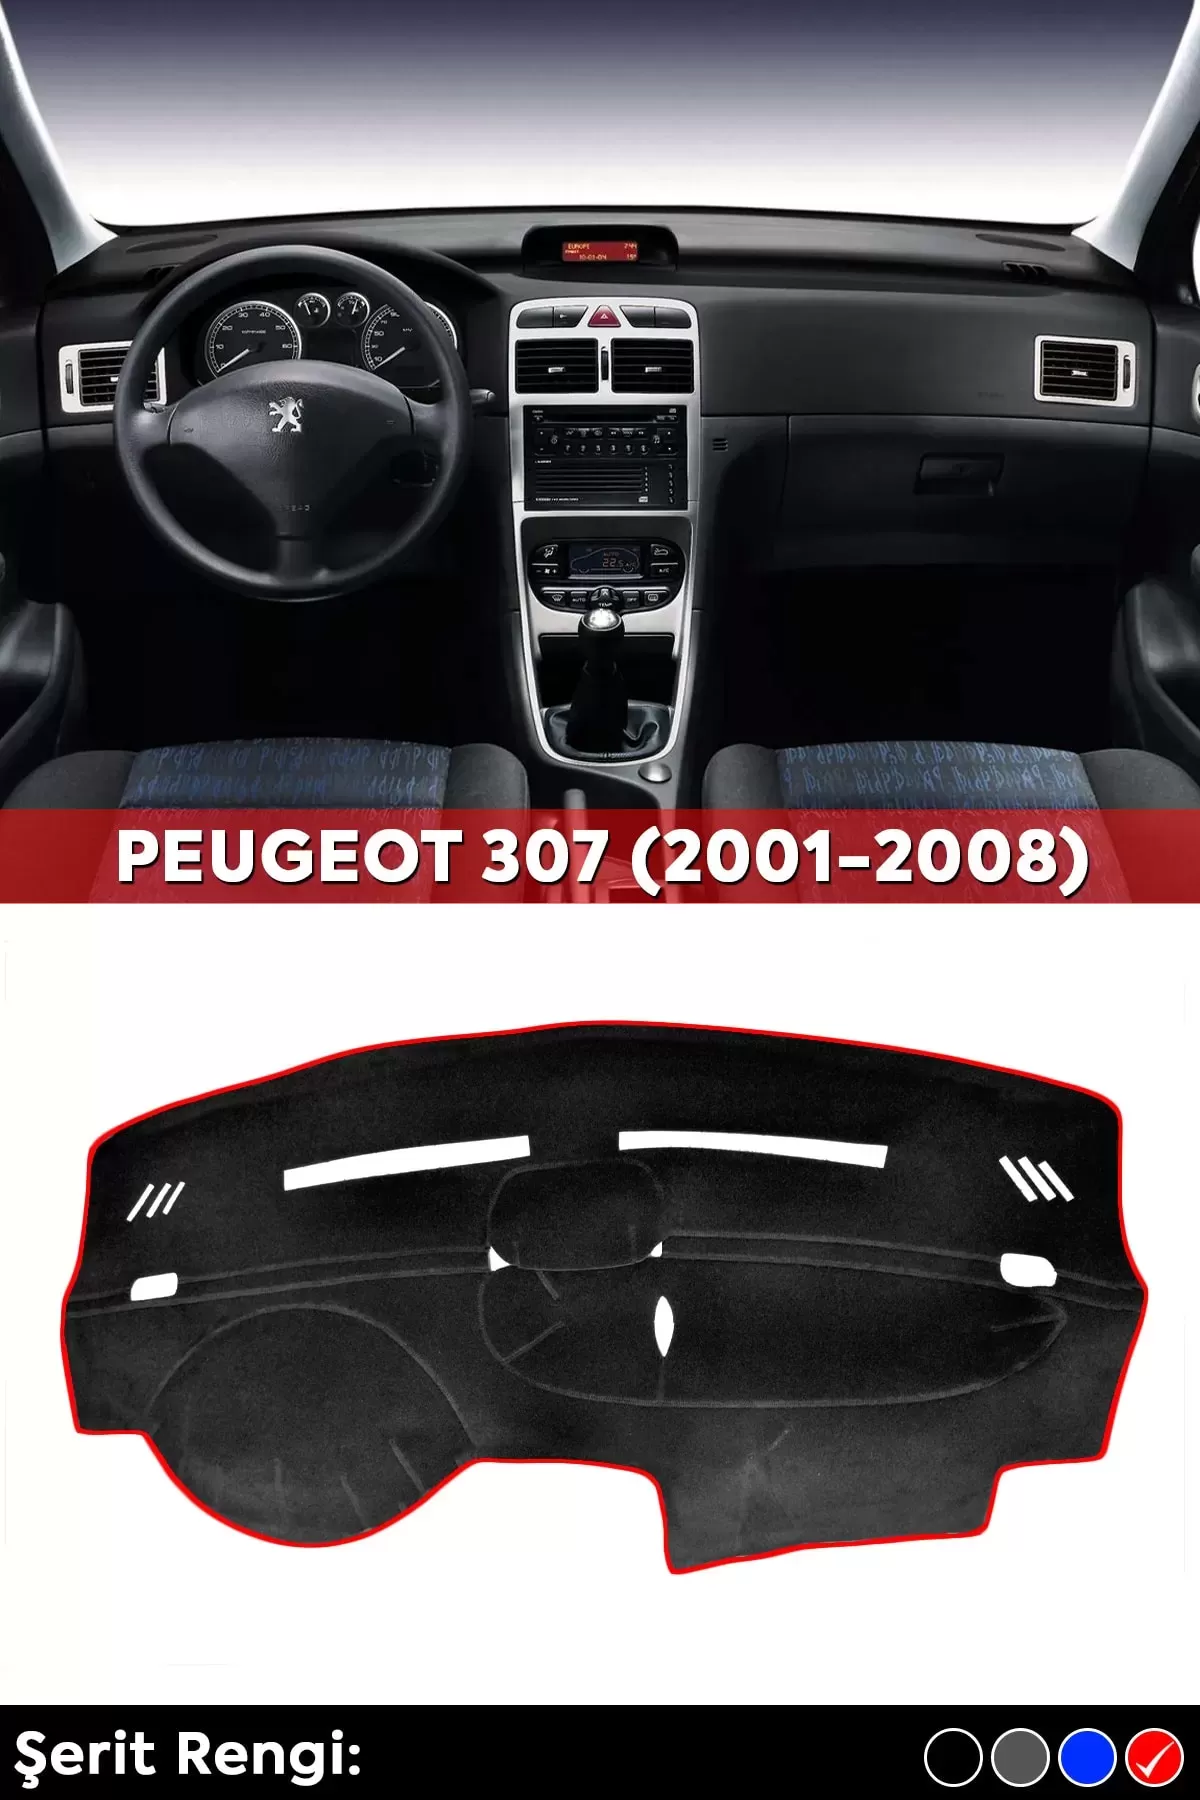 Peugeot 307 (2001-2008) 3d Torpido Koruma Kılıfı - Ön Göğüs Kaplama - Kırmızı Şerit